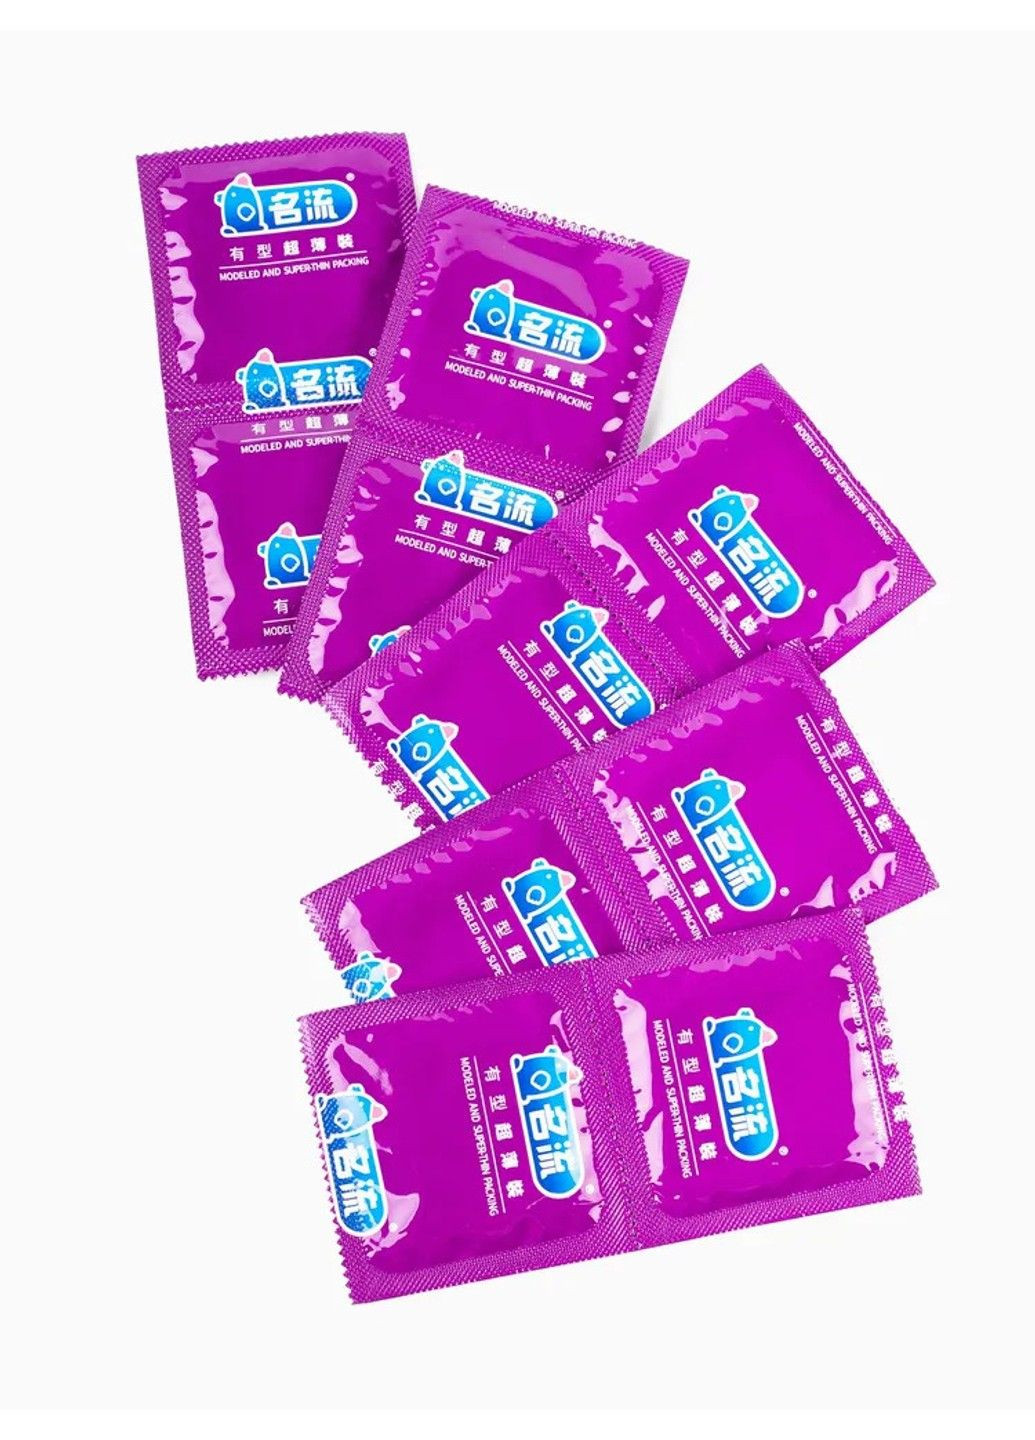 Супертонкие презервативы Personage упаковка 10 штук HBM Group (284279138)